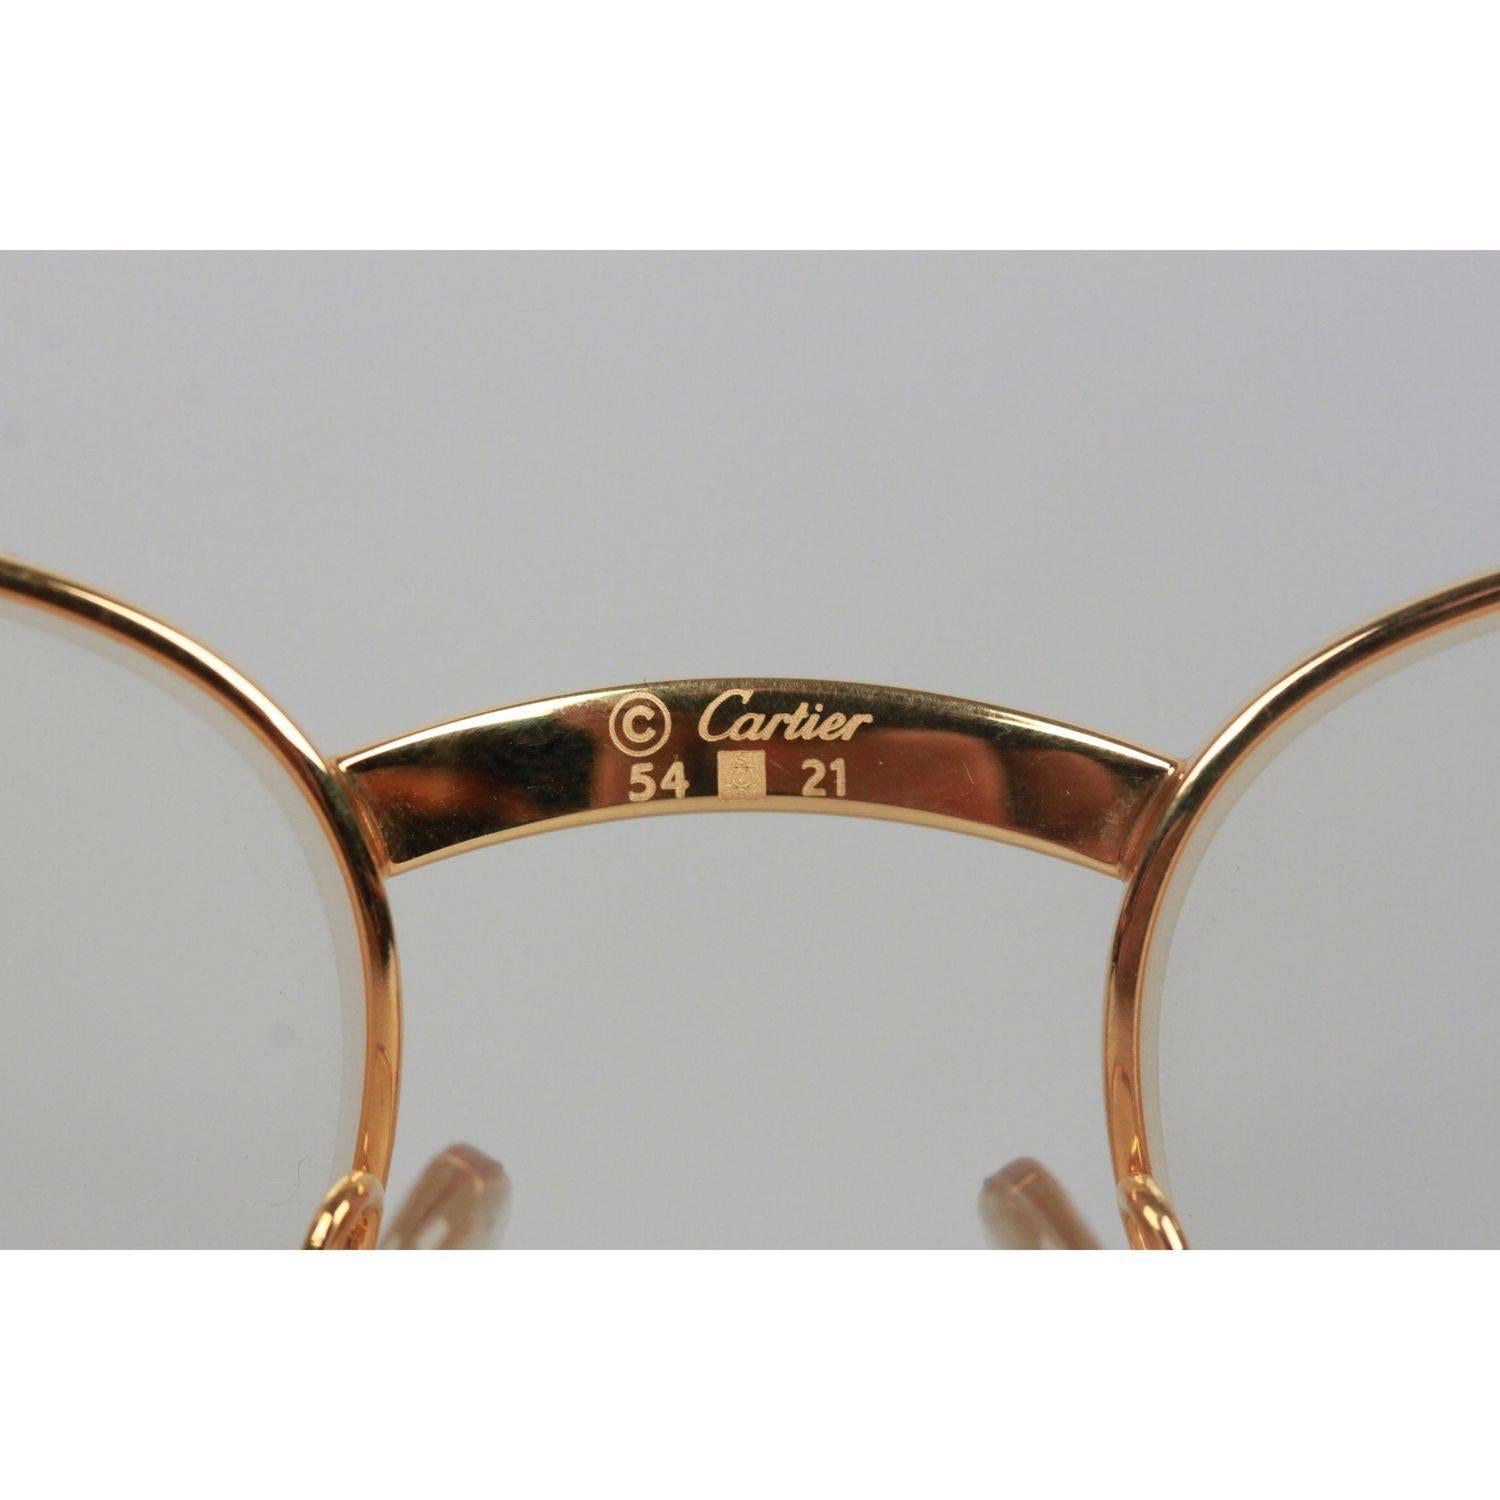 Cartier Paris Aube Tortoise Gold Frame Clear Lens Eyeglasses 54-21 140 NOS 2